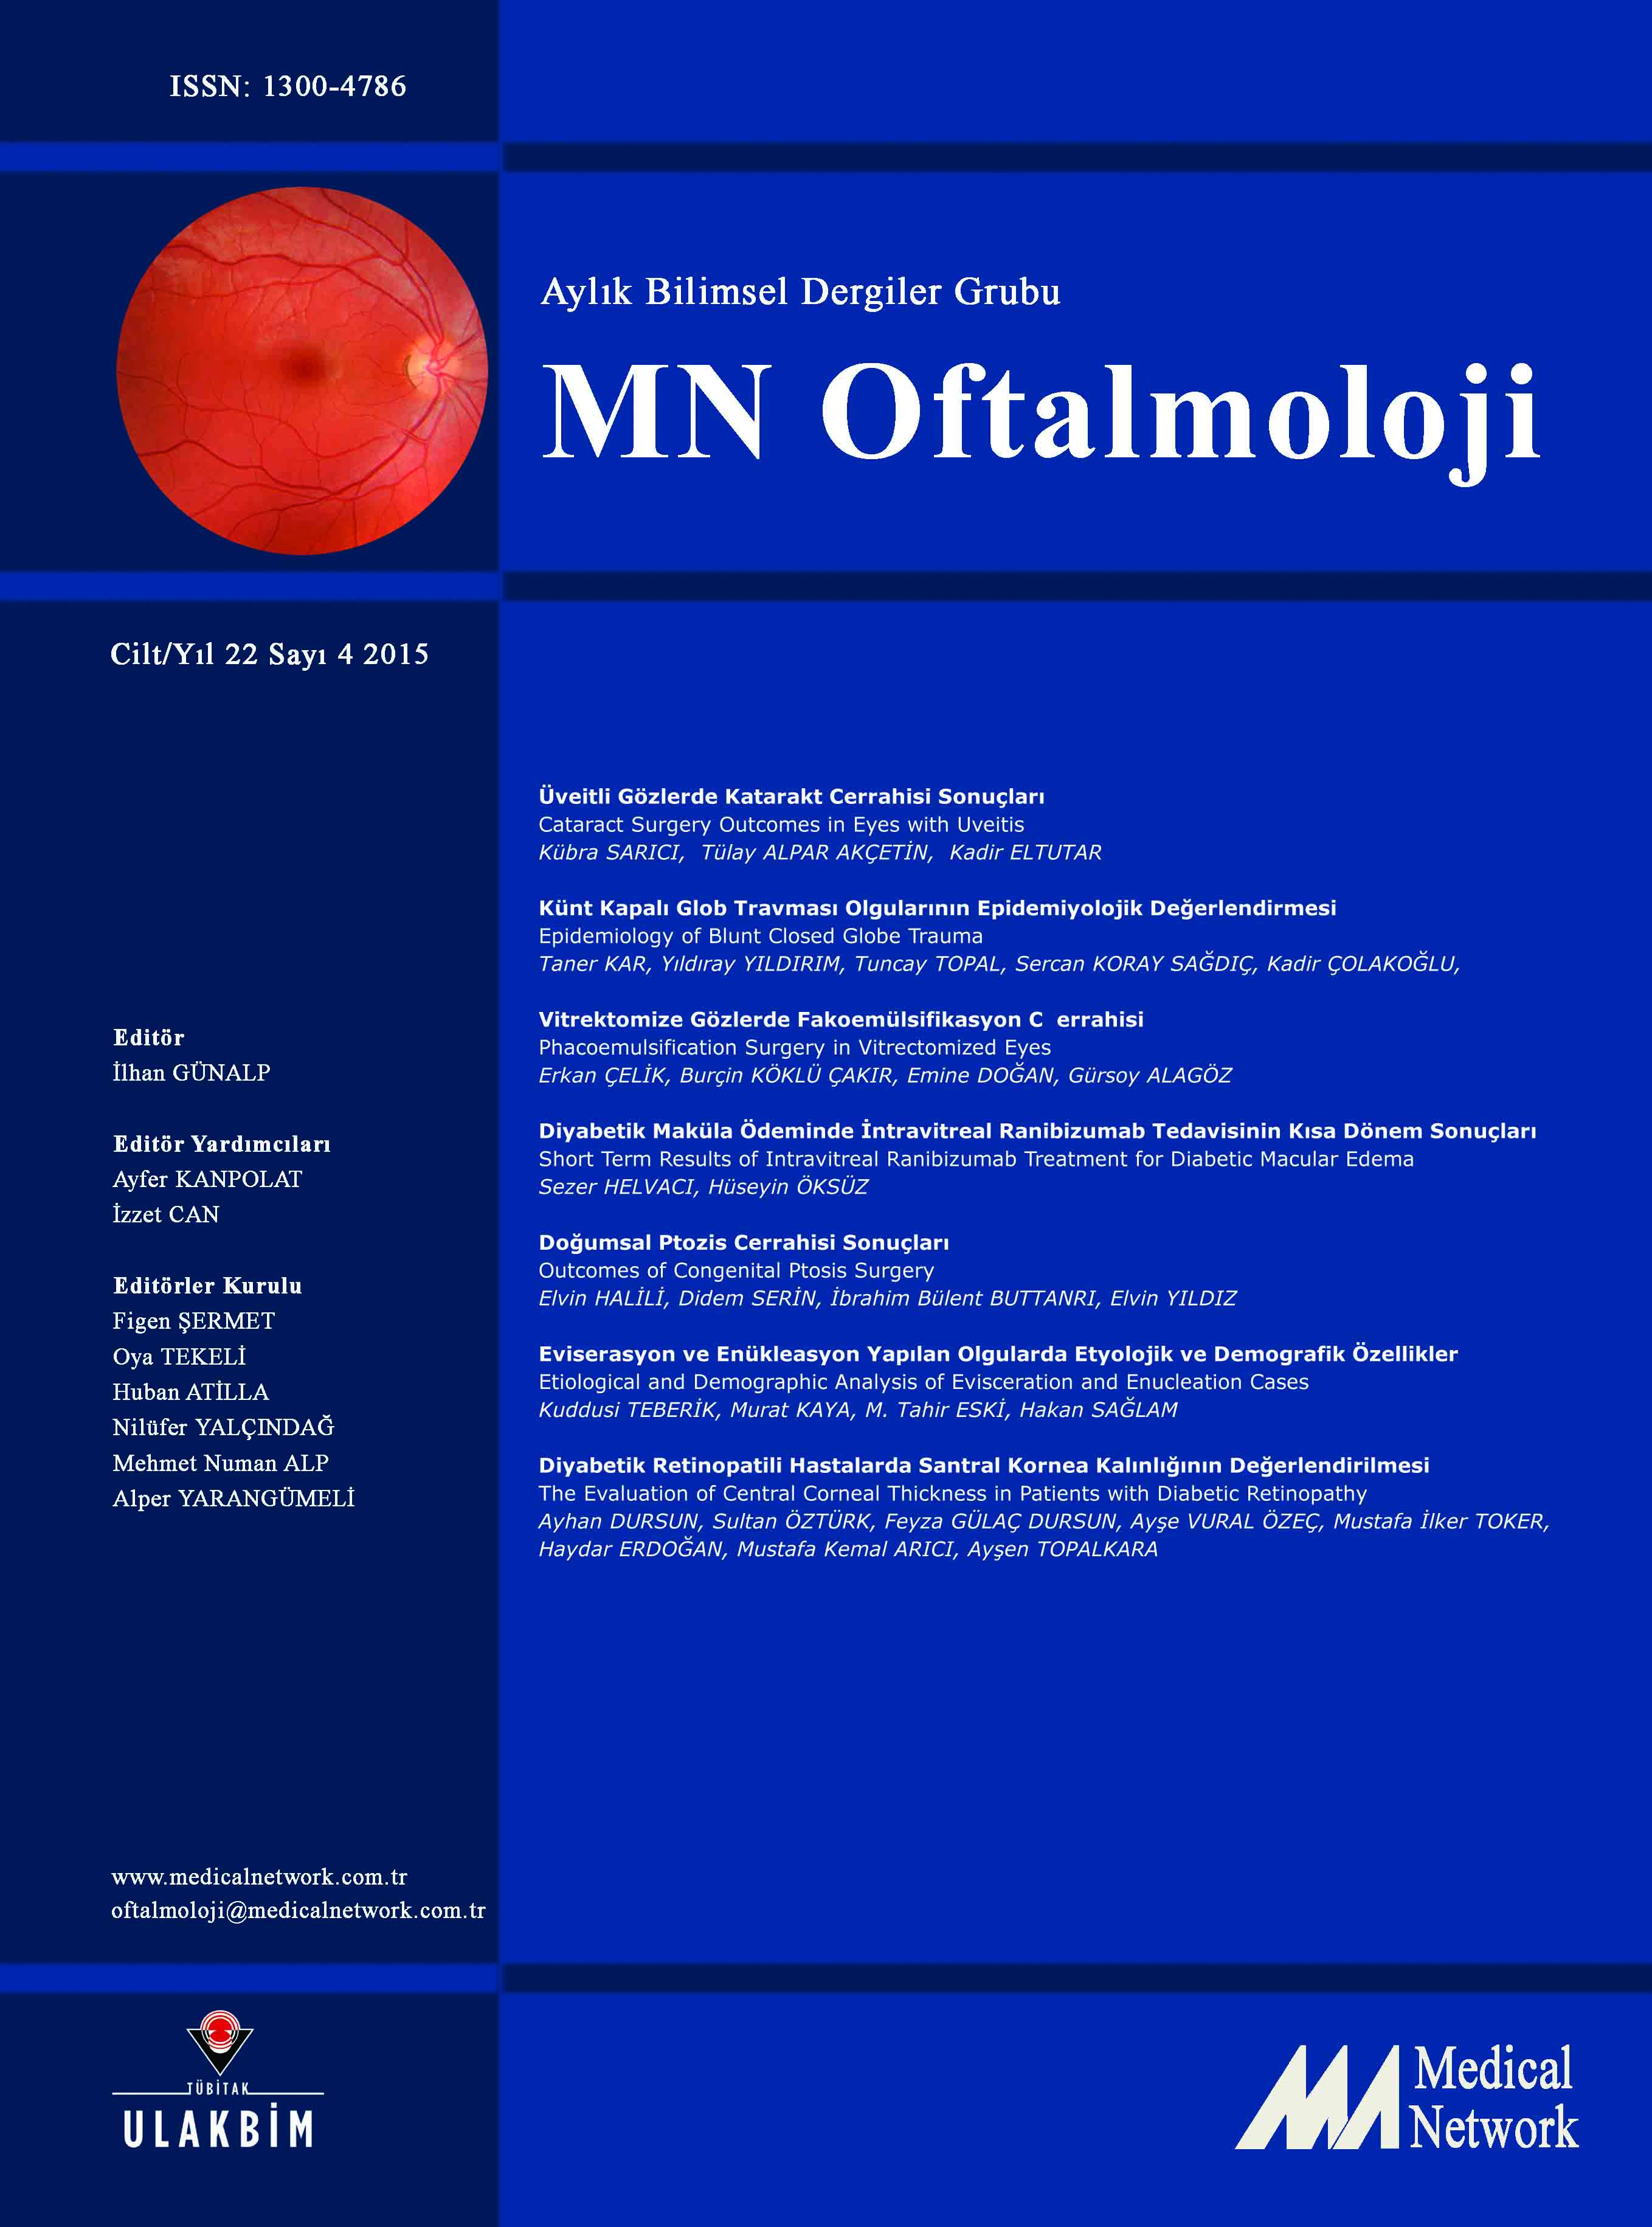 <p>MN Oftalmoloji Cilt: 22 Sayı: 4 2015 (MN Ophthalmology Volume: 22 No 4 2015)</p>